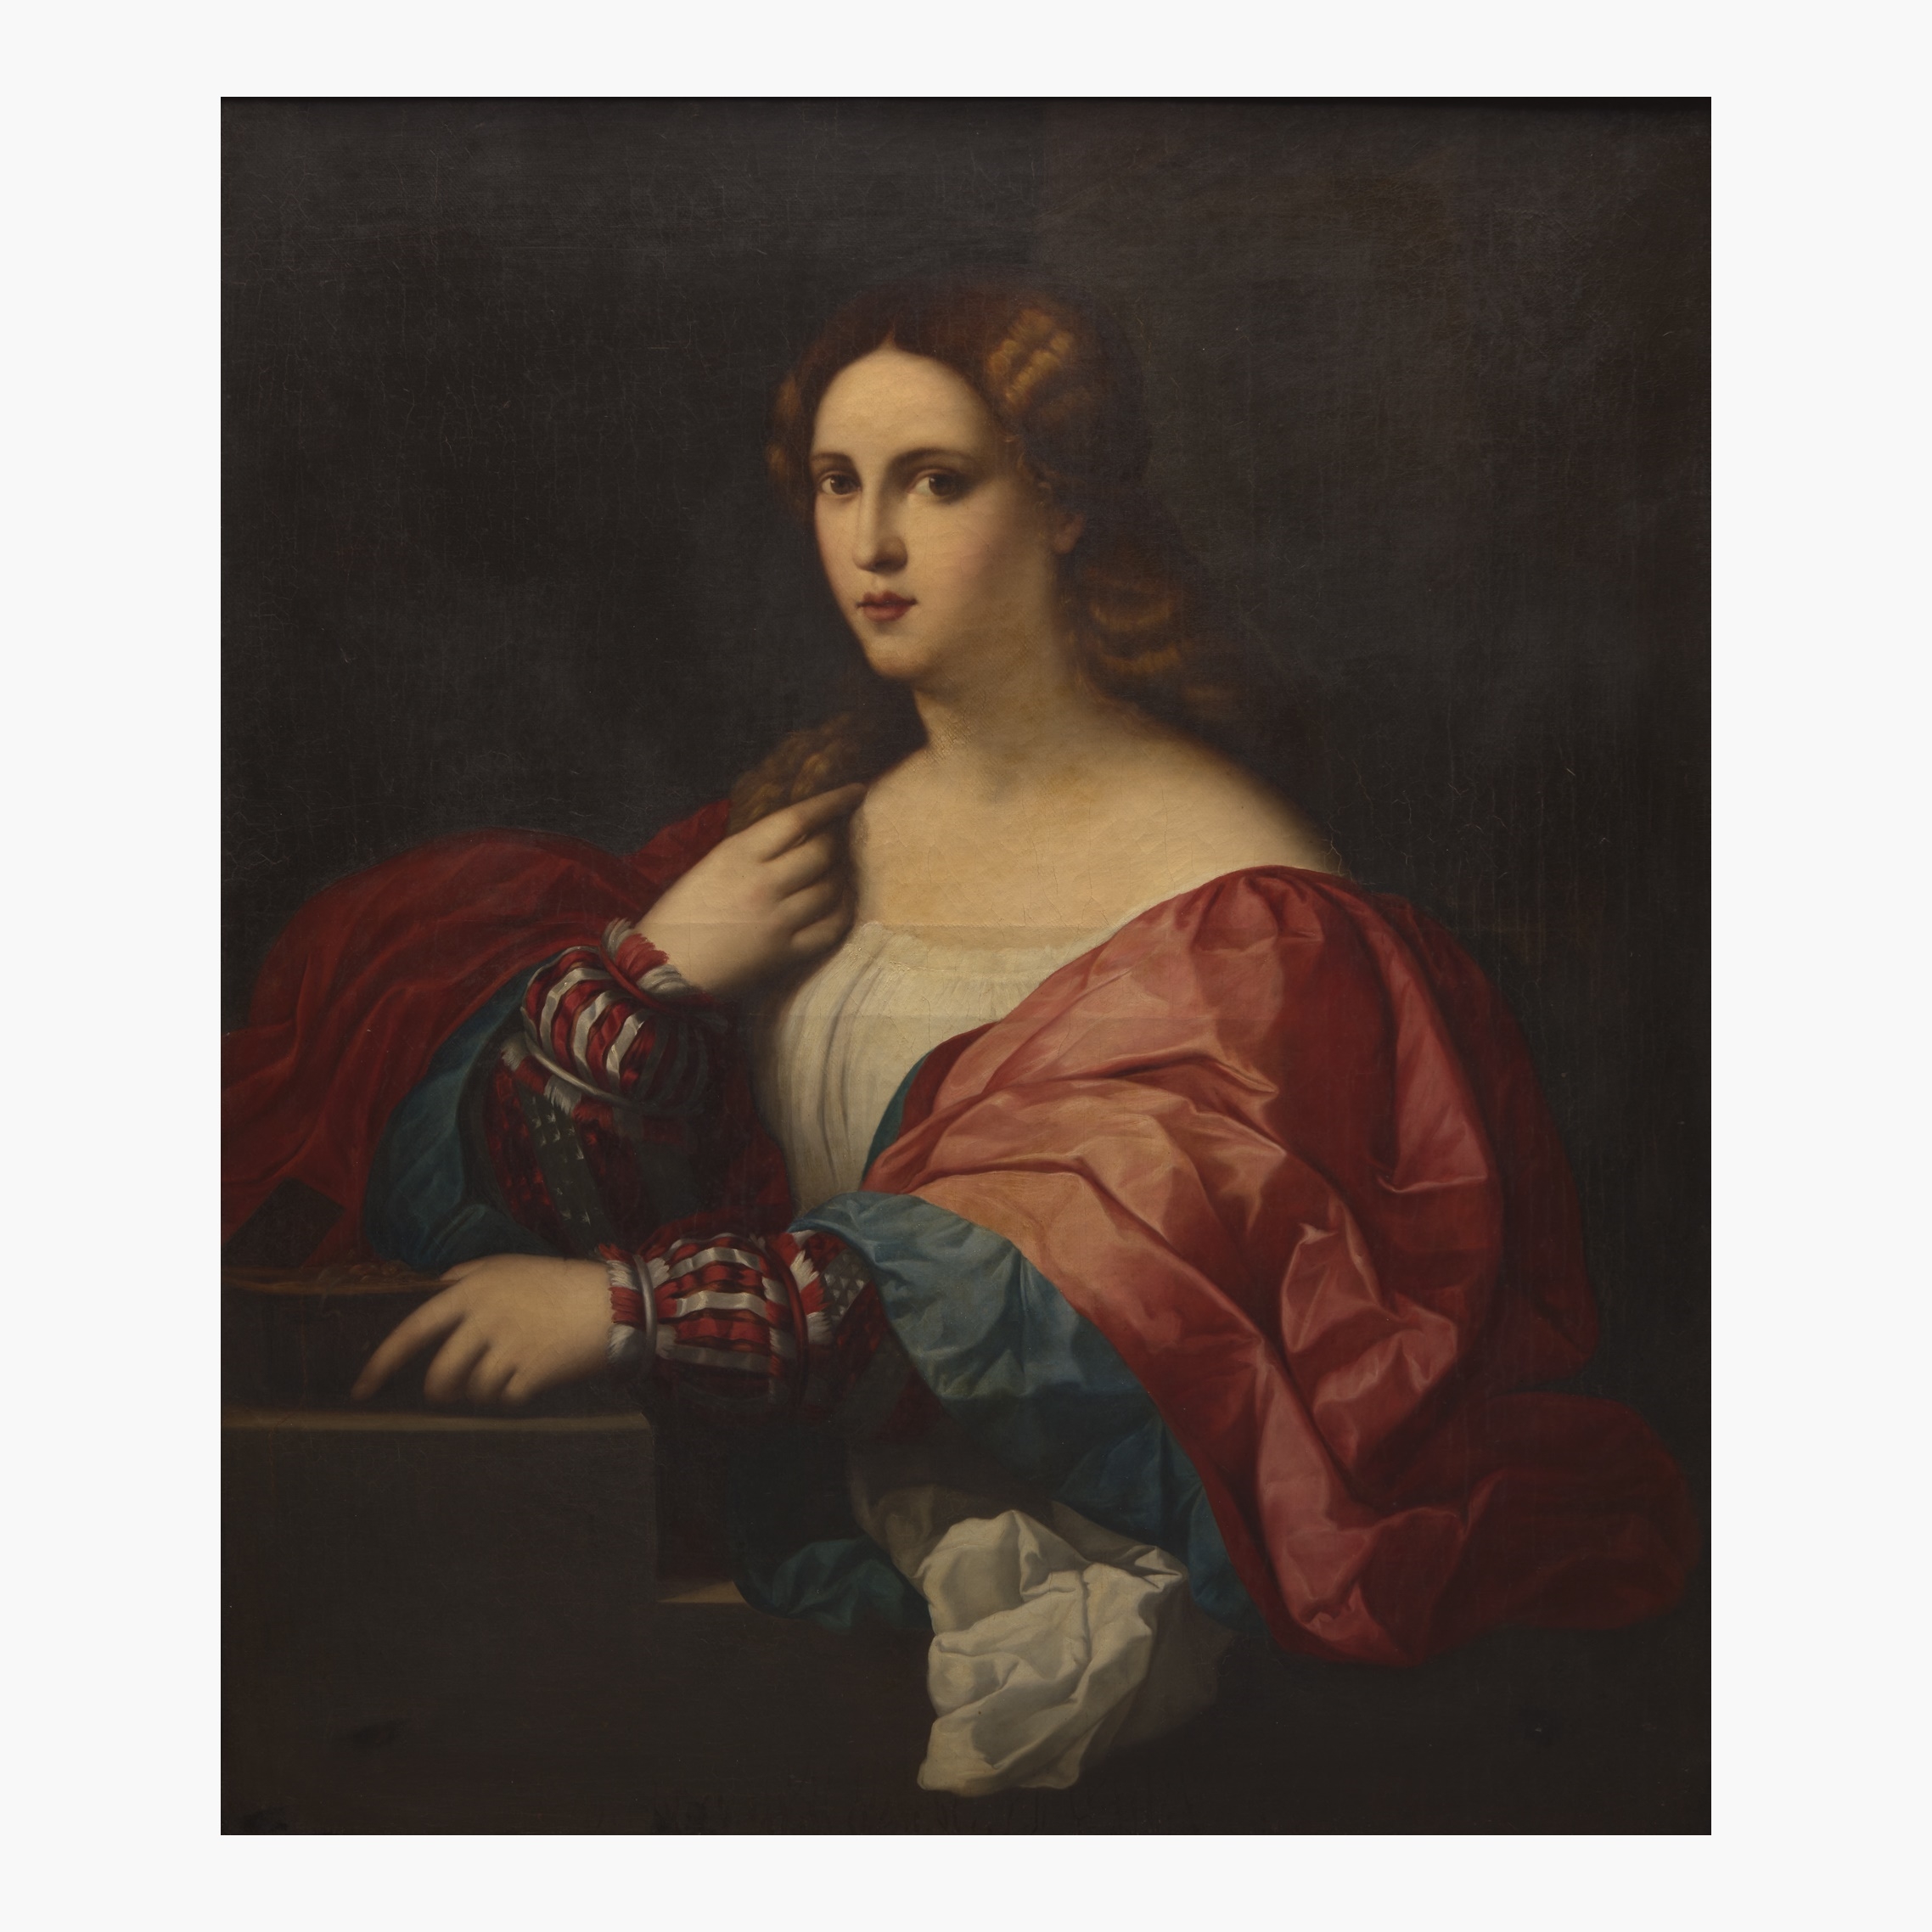 Portrait of a Young Woman Known as 'La Bella' by Jacopo Palma il Vecchio